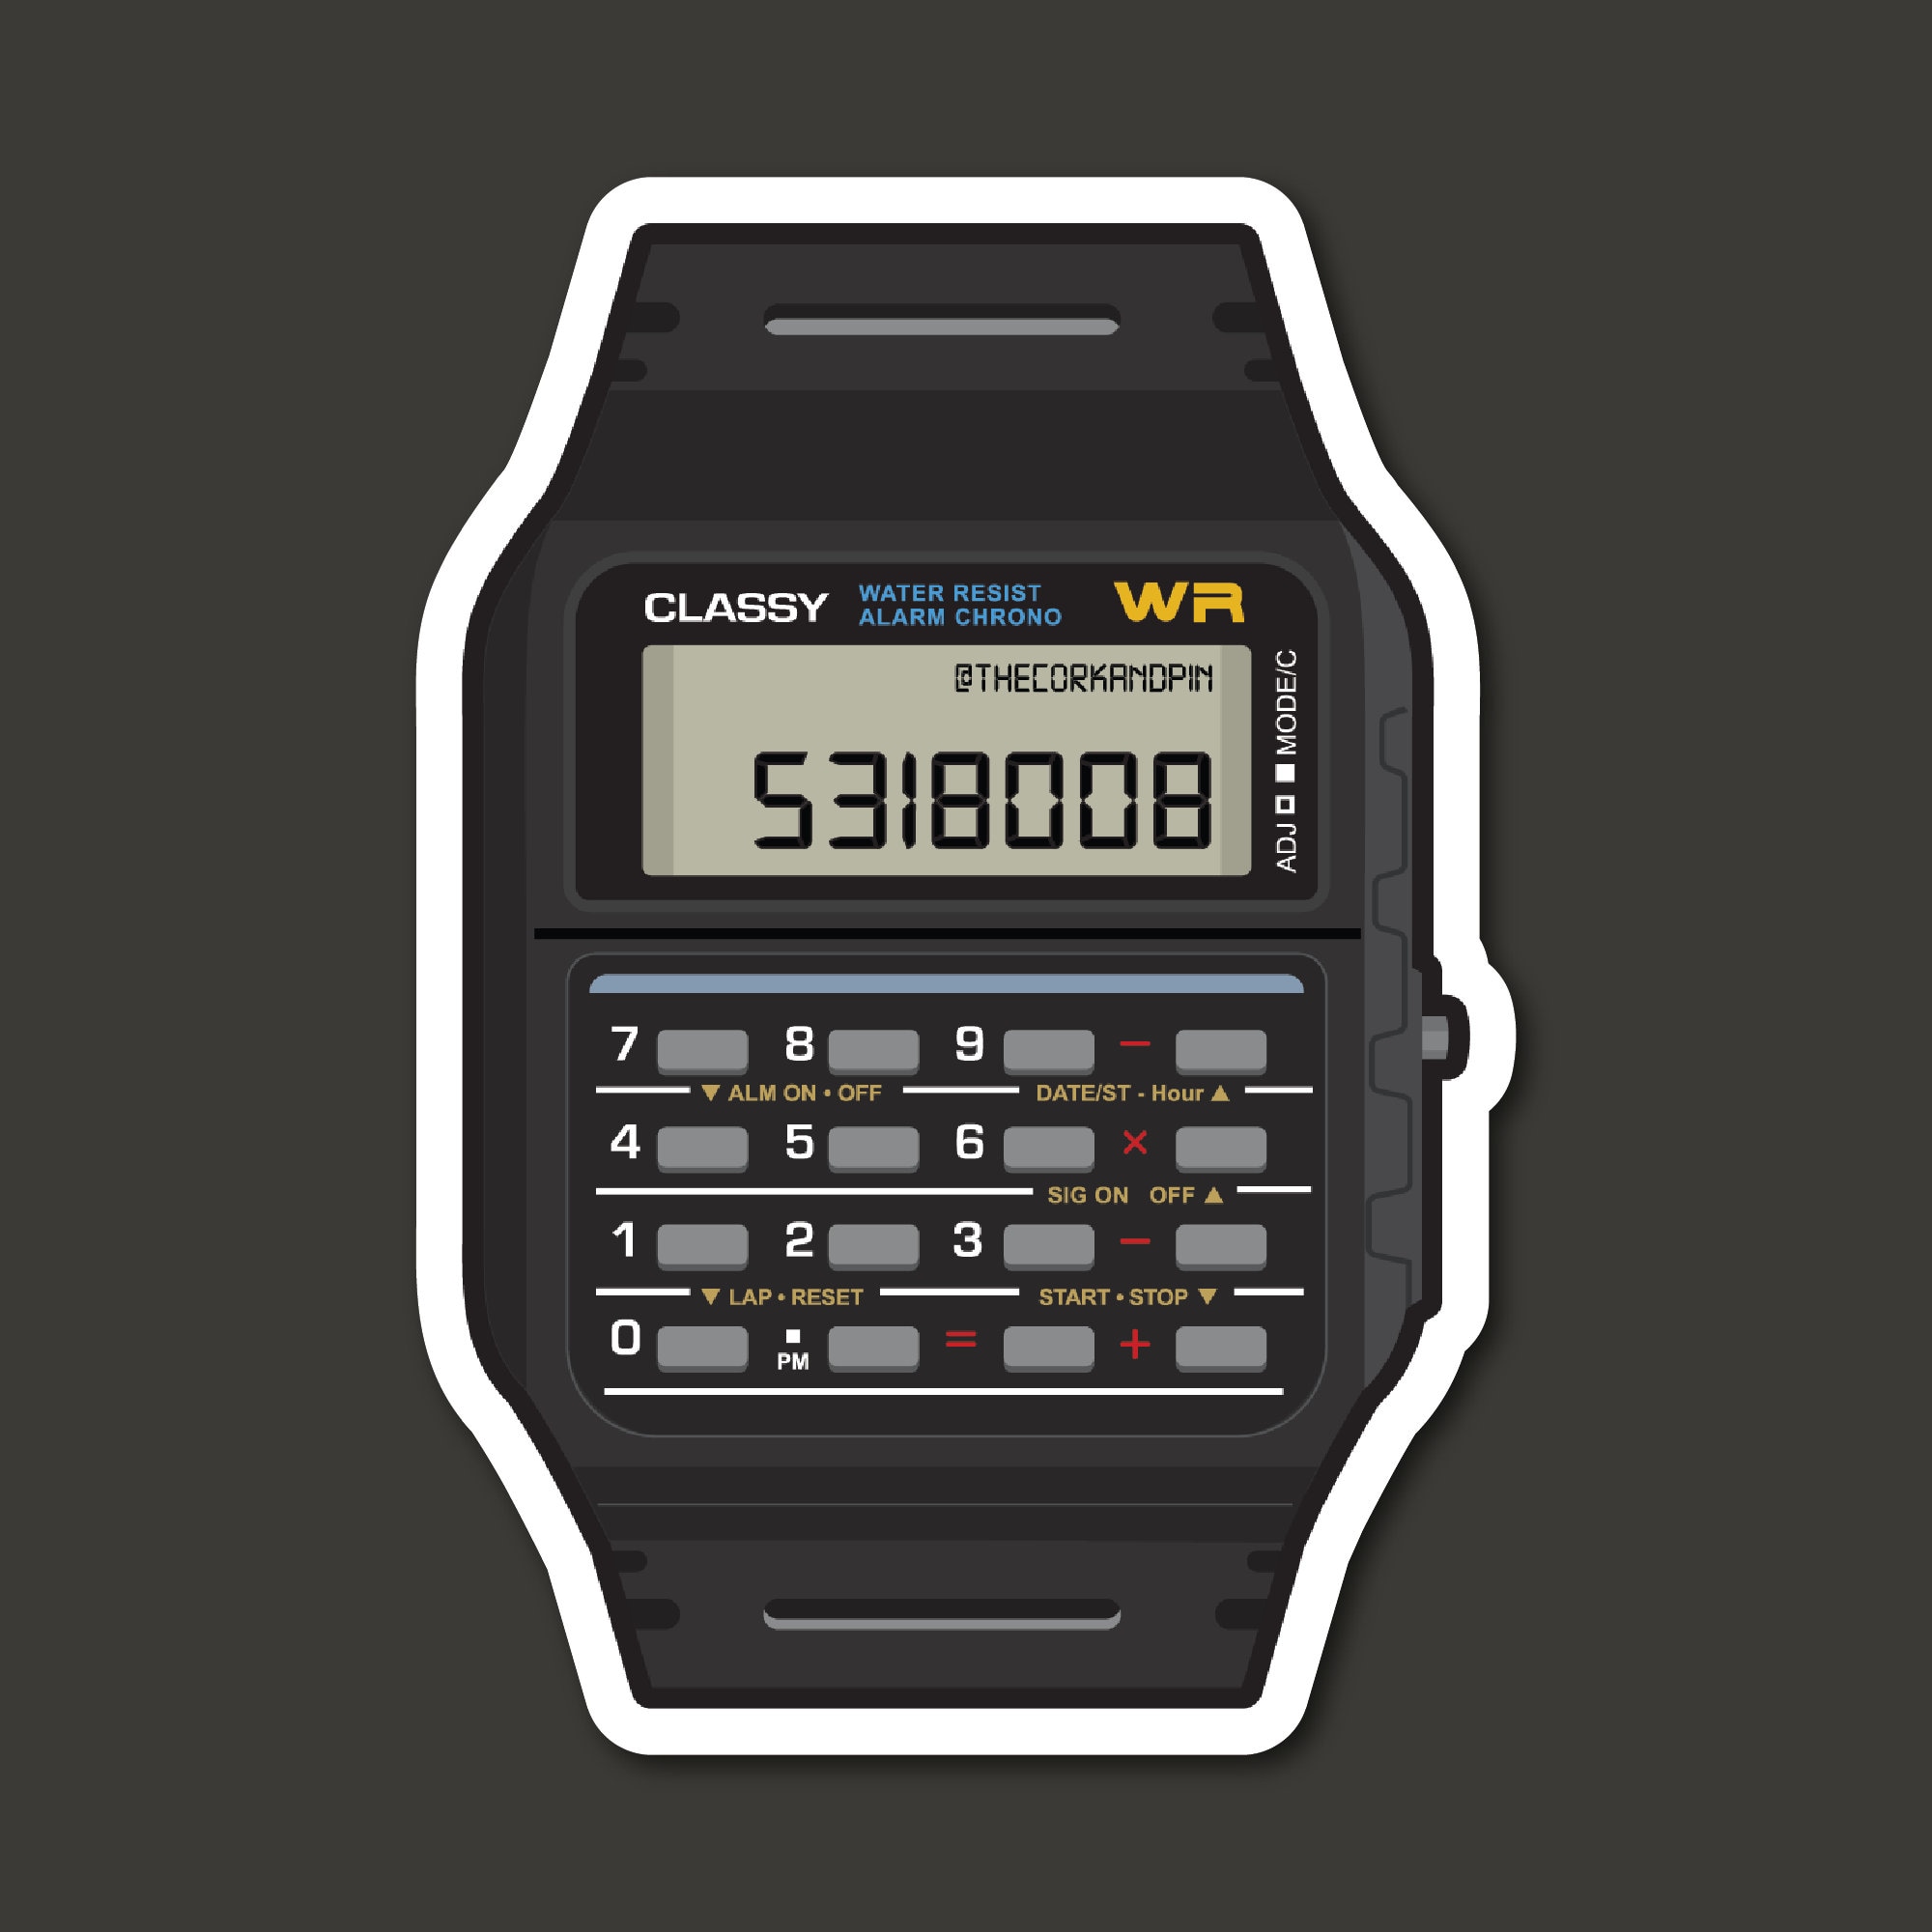 Casio Calculator Watch Sticker Retro 8 Bit -